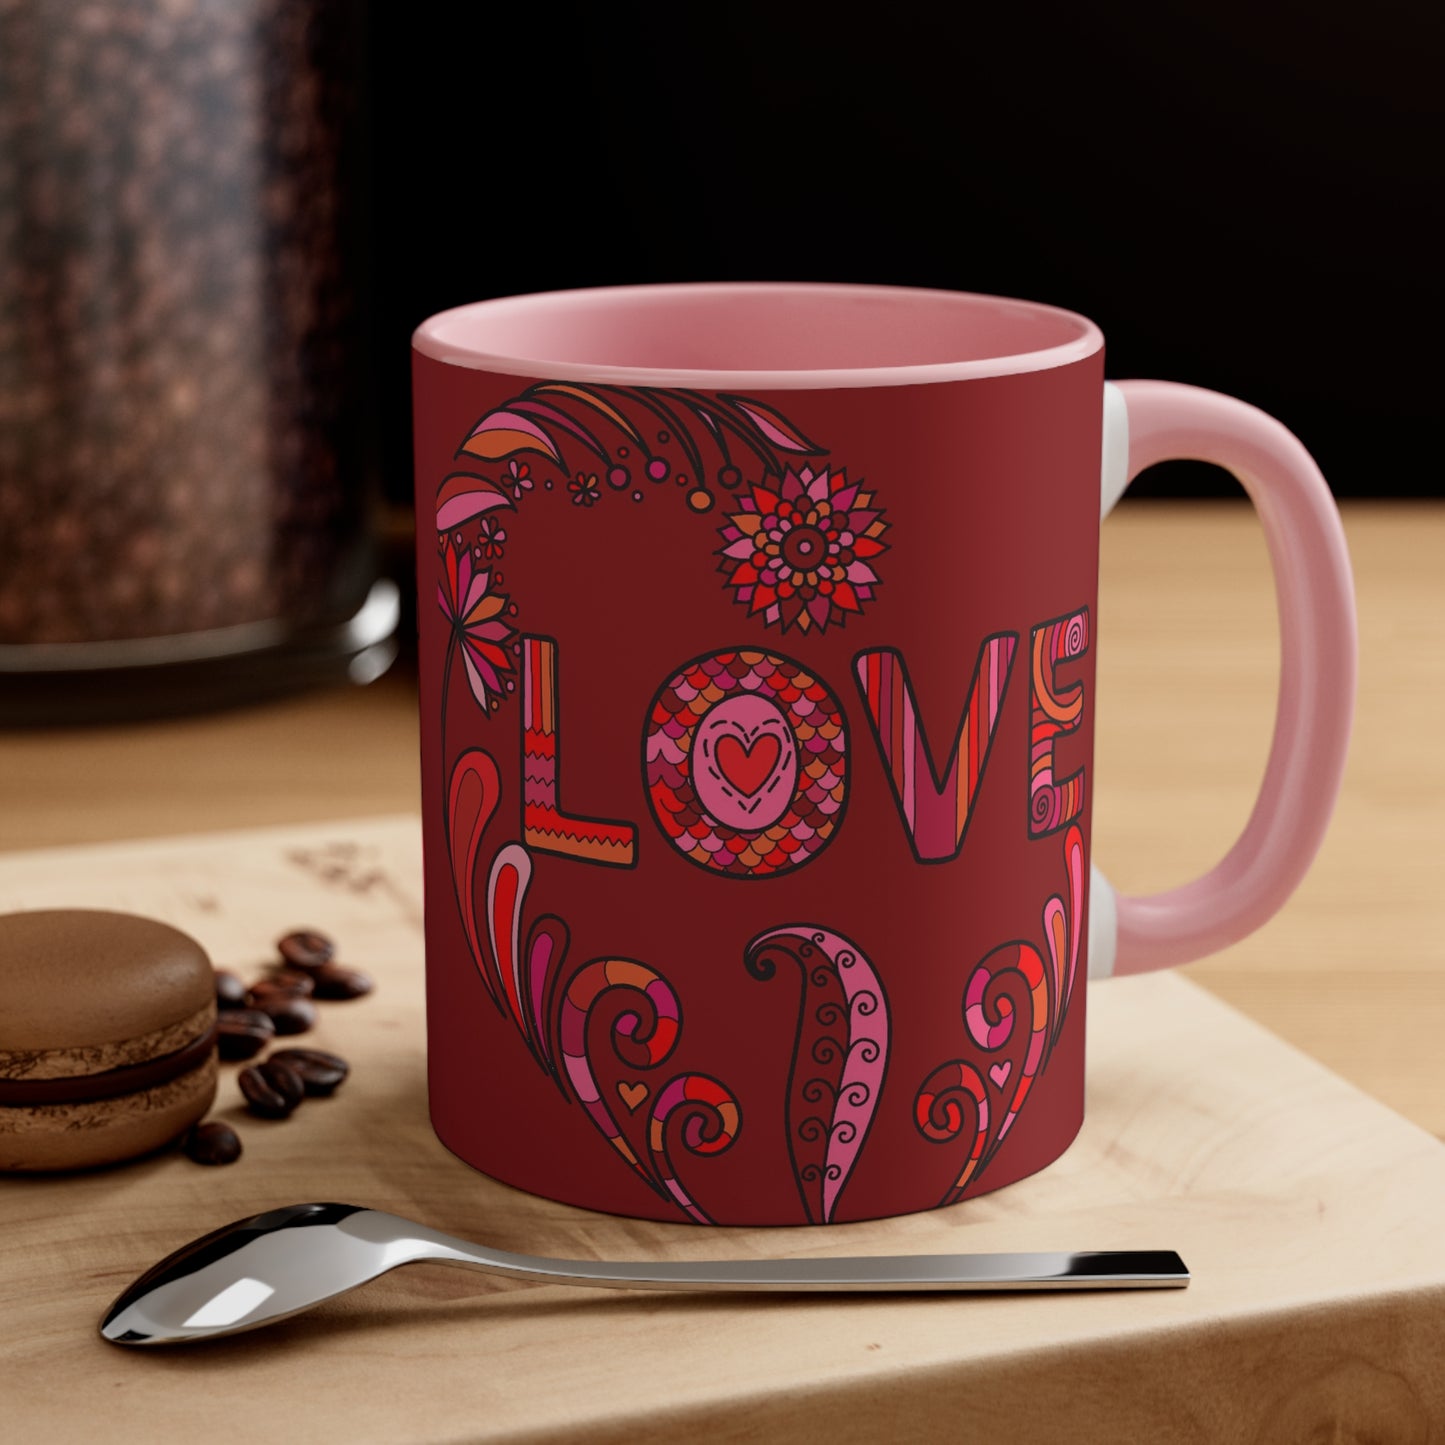 Accent Two Tone Coffee Mug, 11oz - Boho Love Mug pink